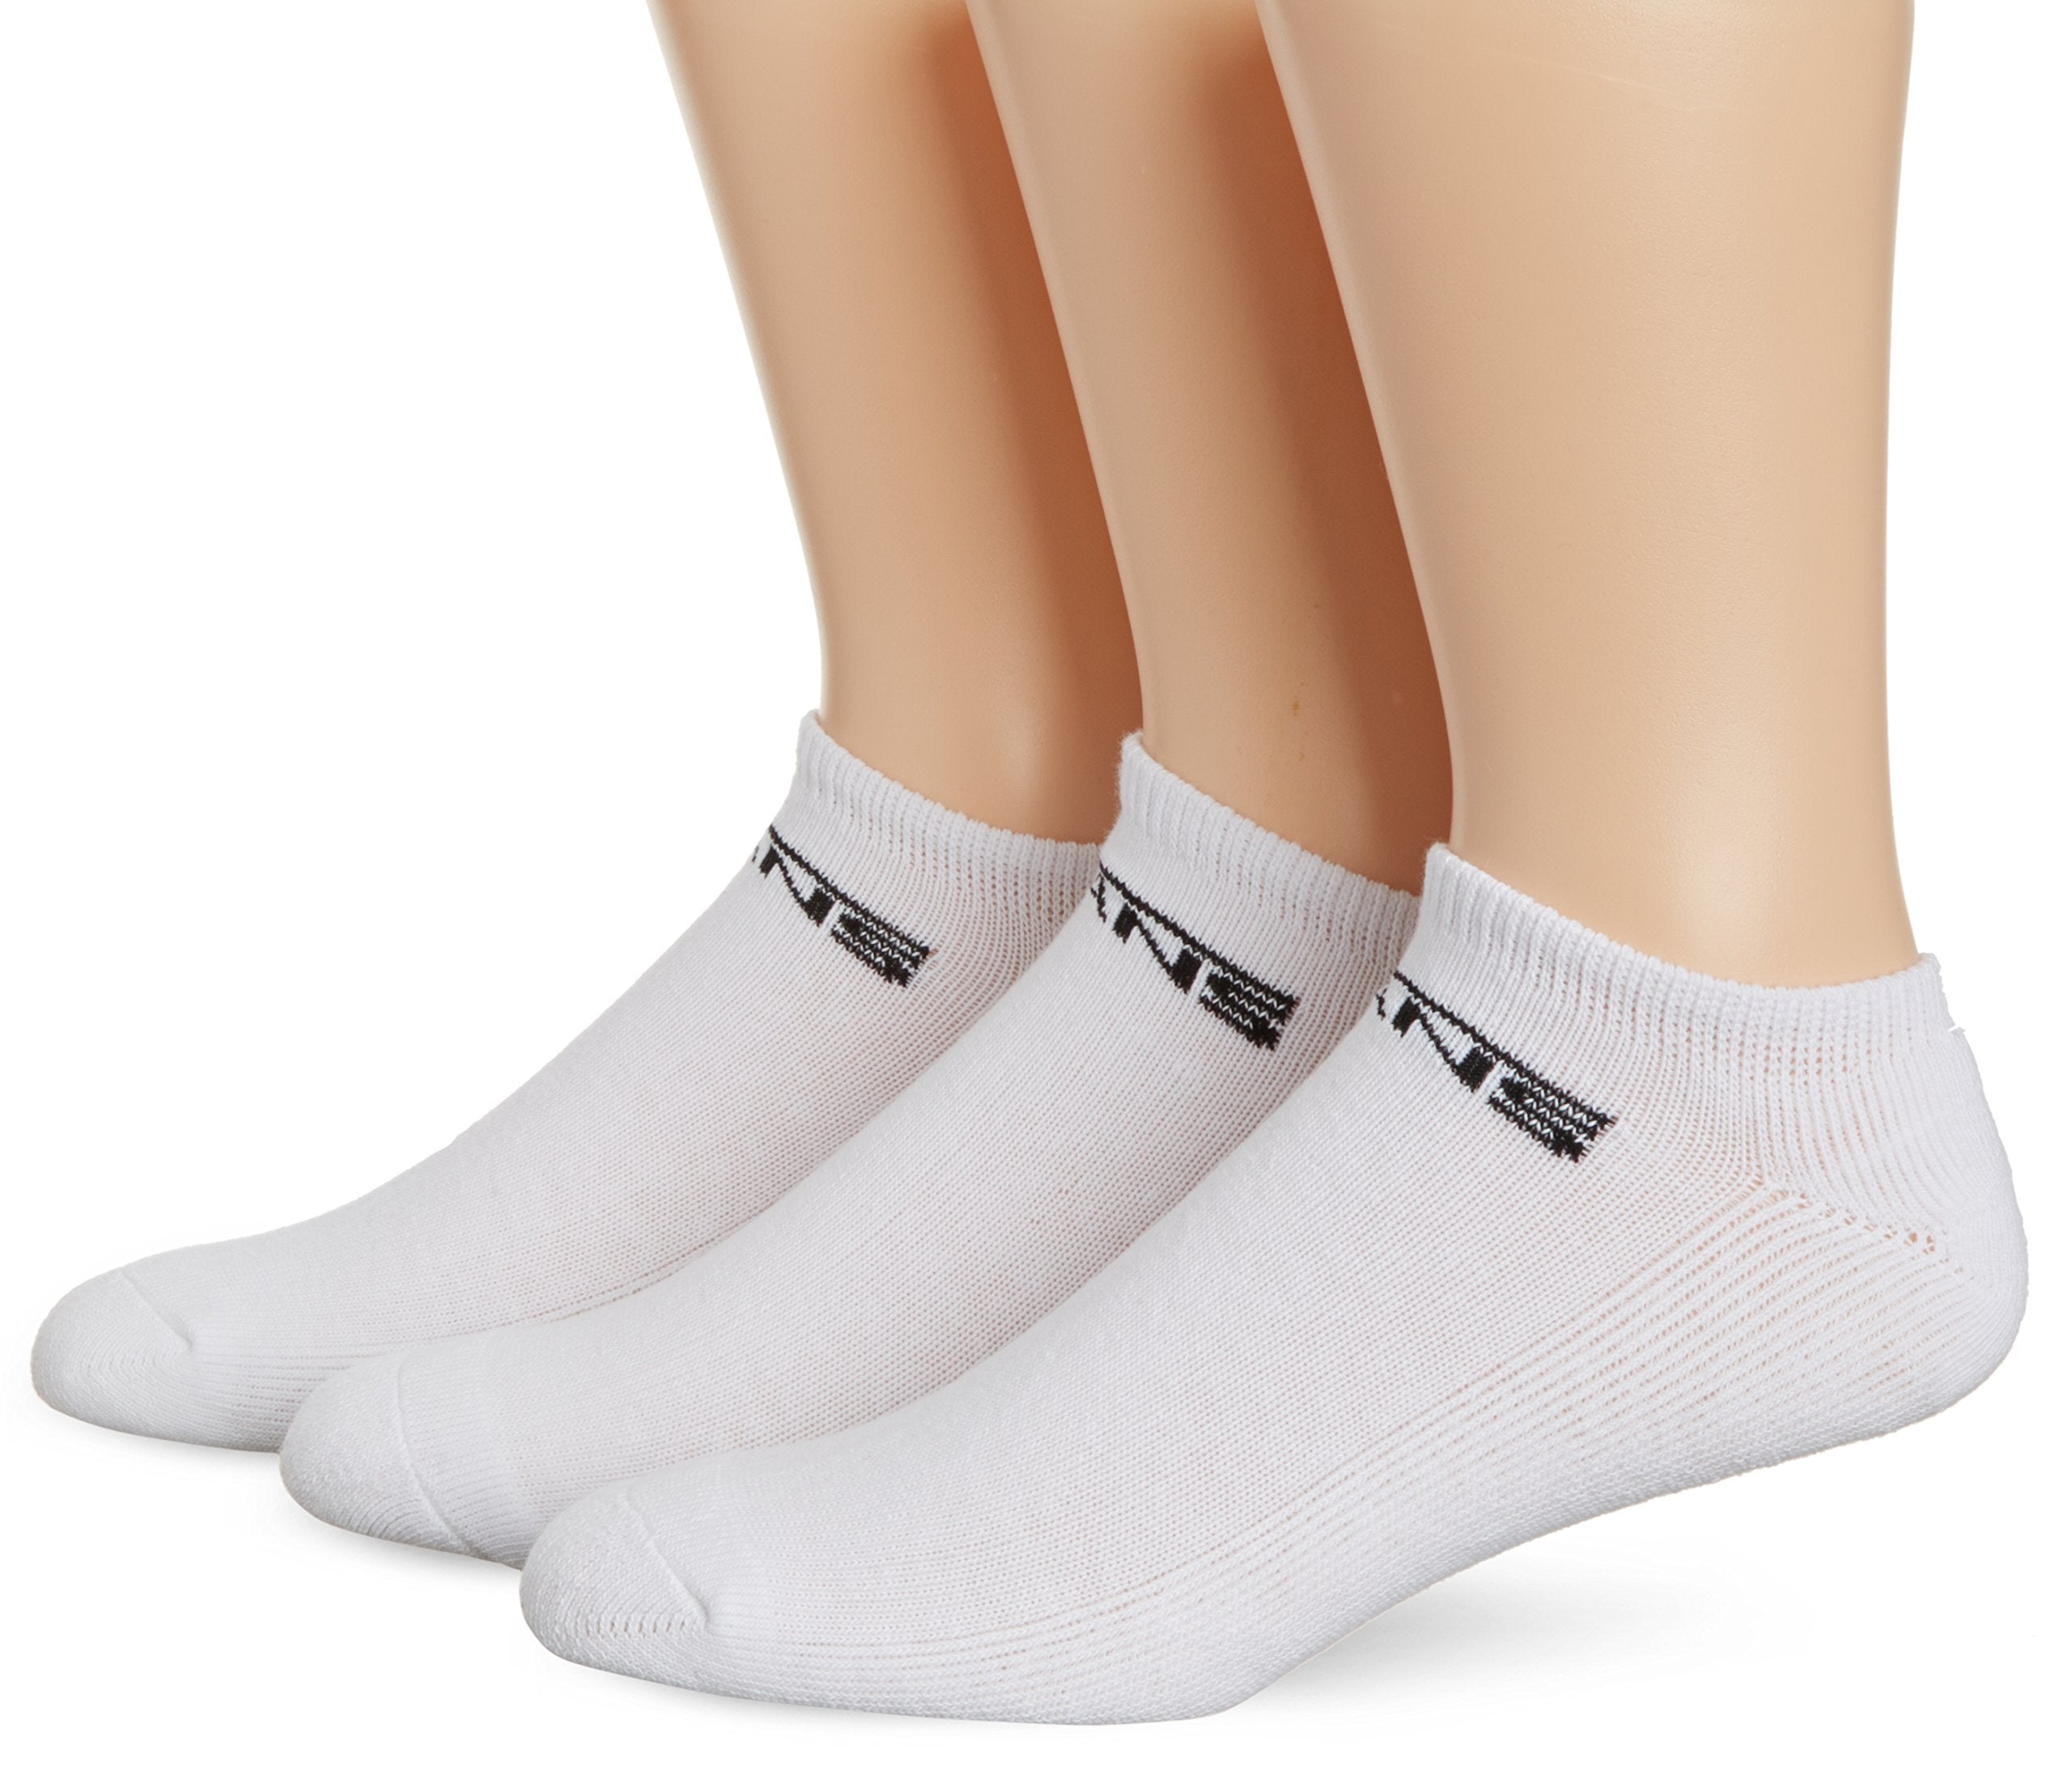 Vans Mens Socks One Size White - Sneakermaniany